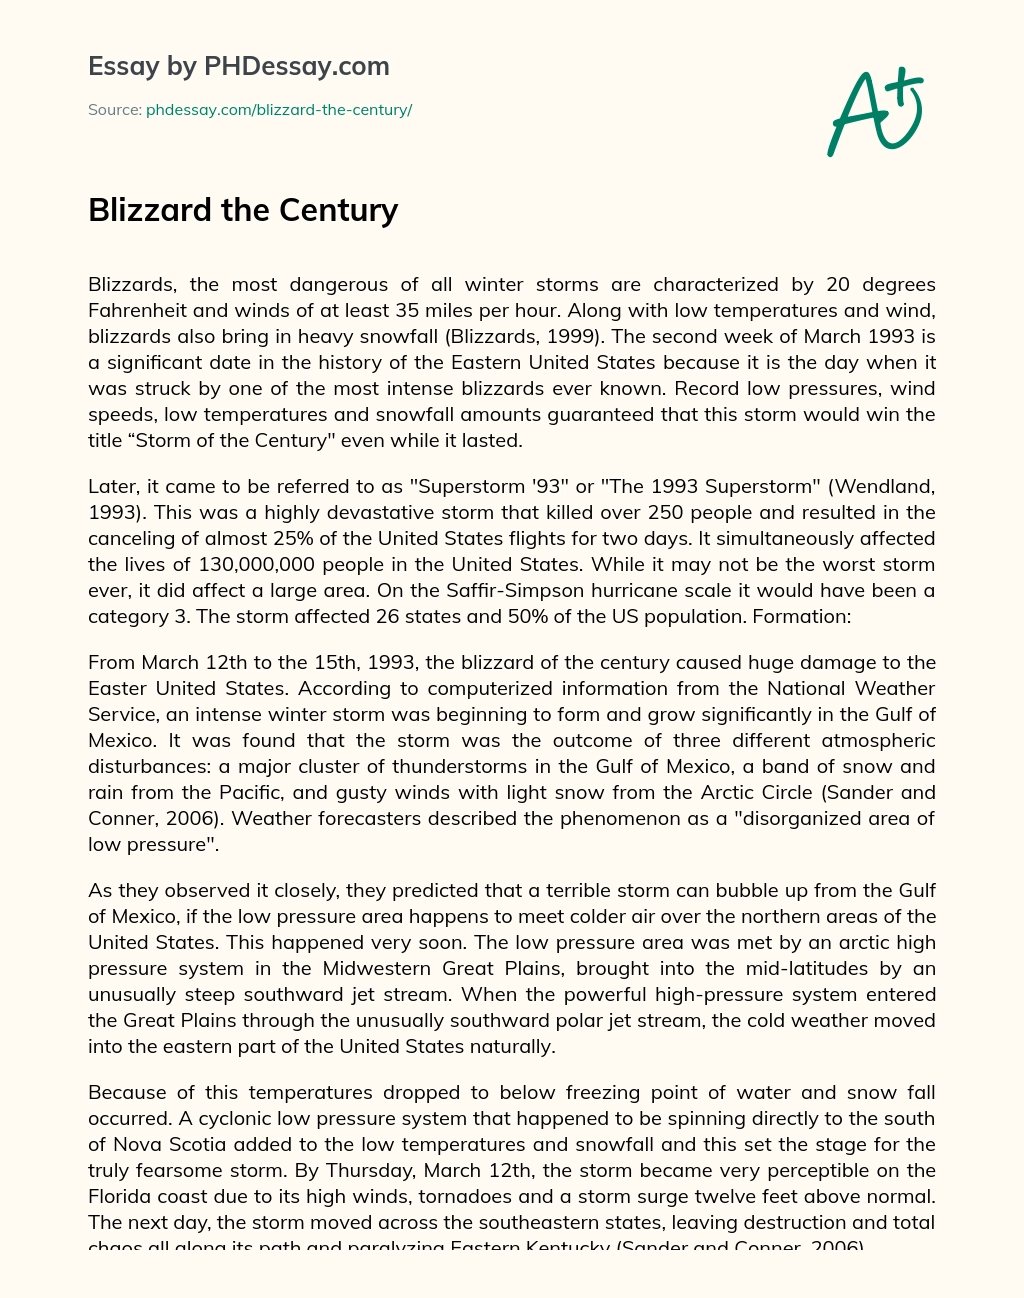 Blizzard the Century essay